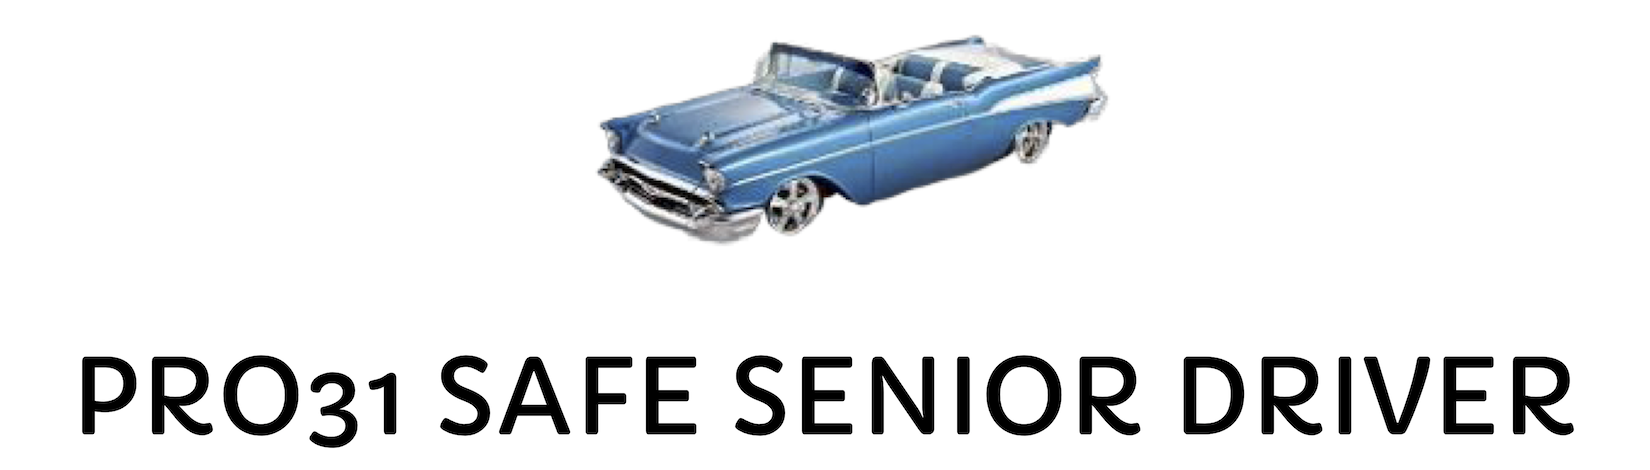 Pro31 Safe Senior Driver